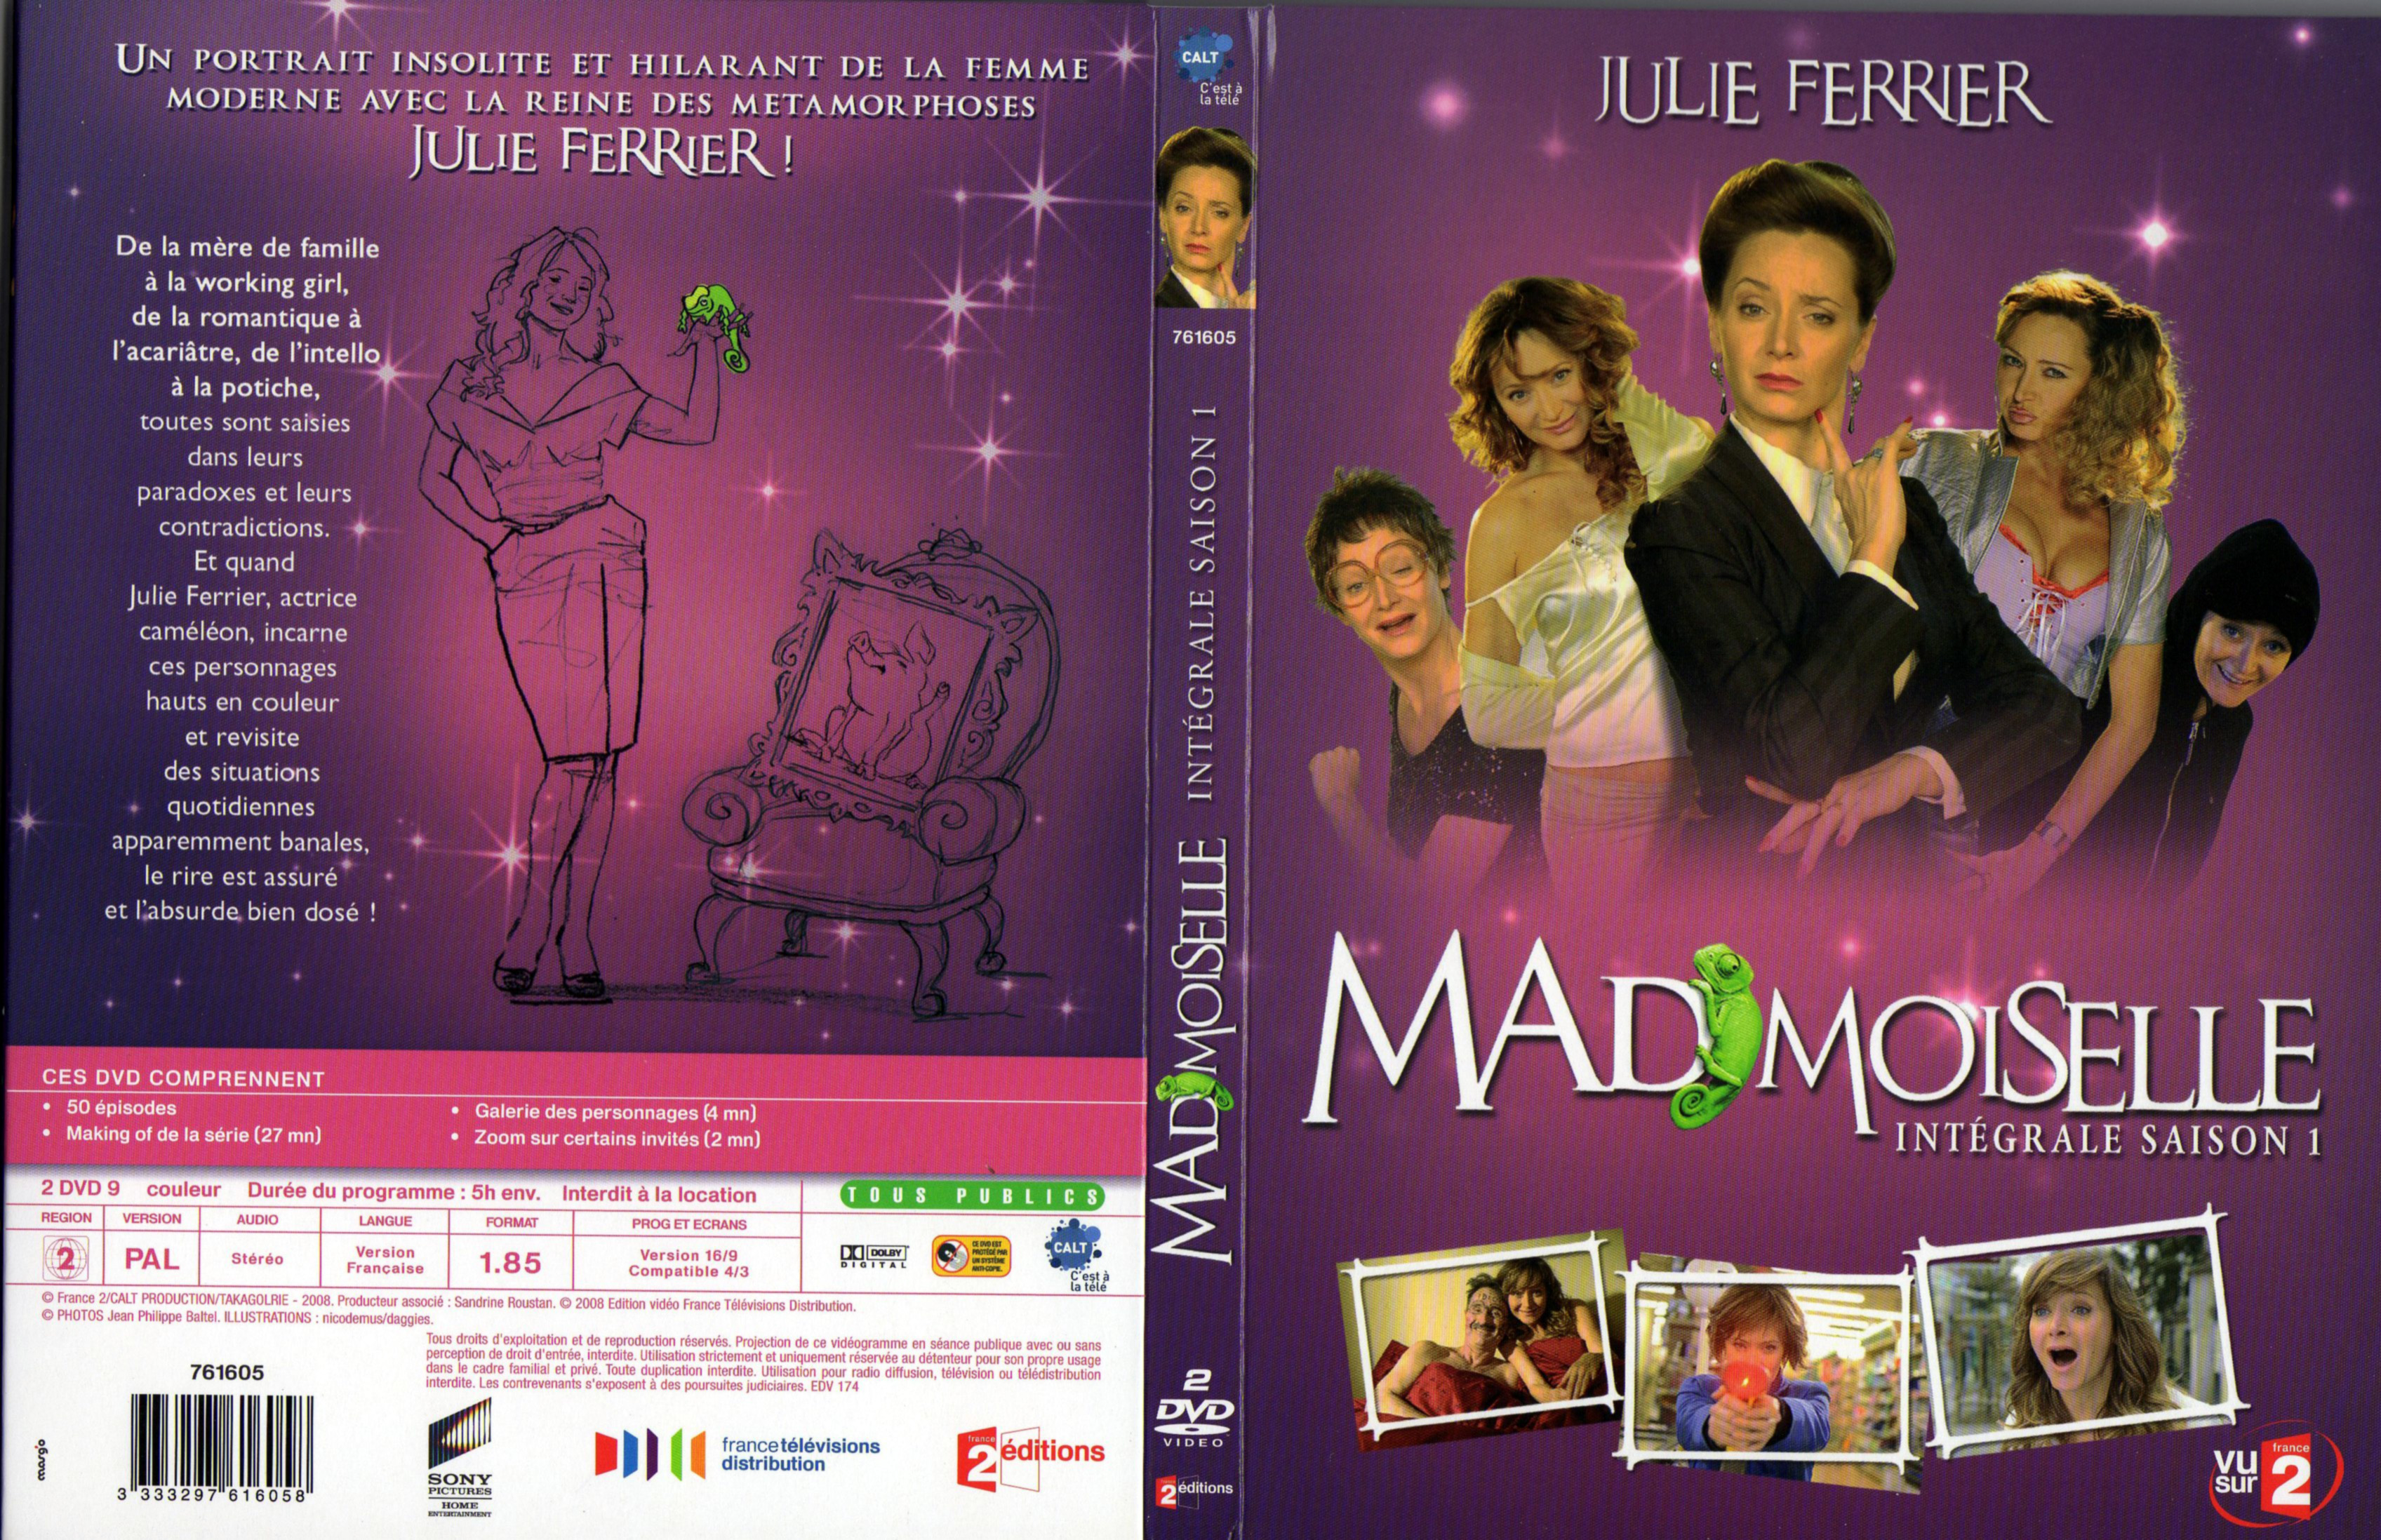 Jaquette DVD Mademoiselle saison 1